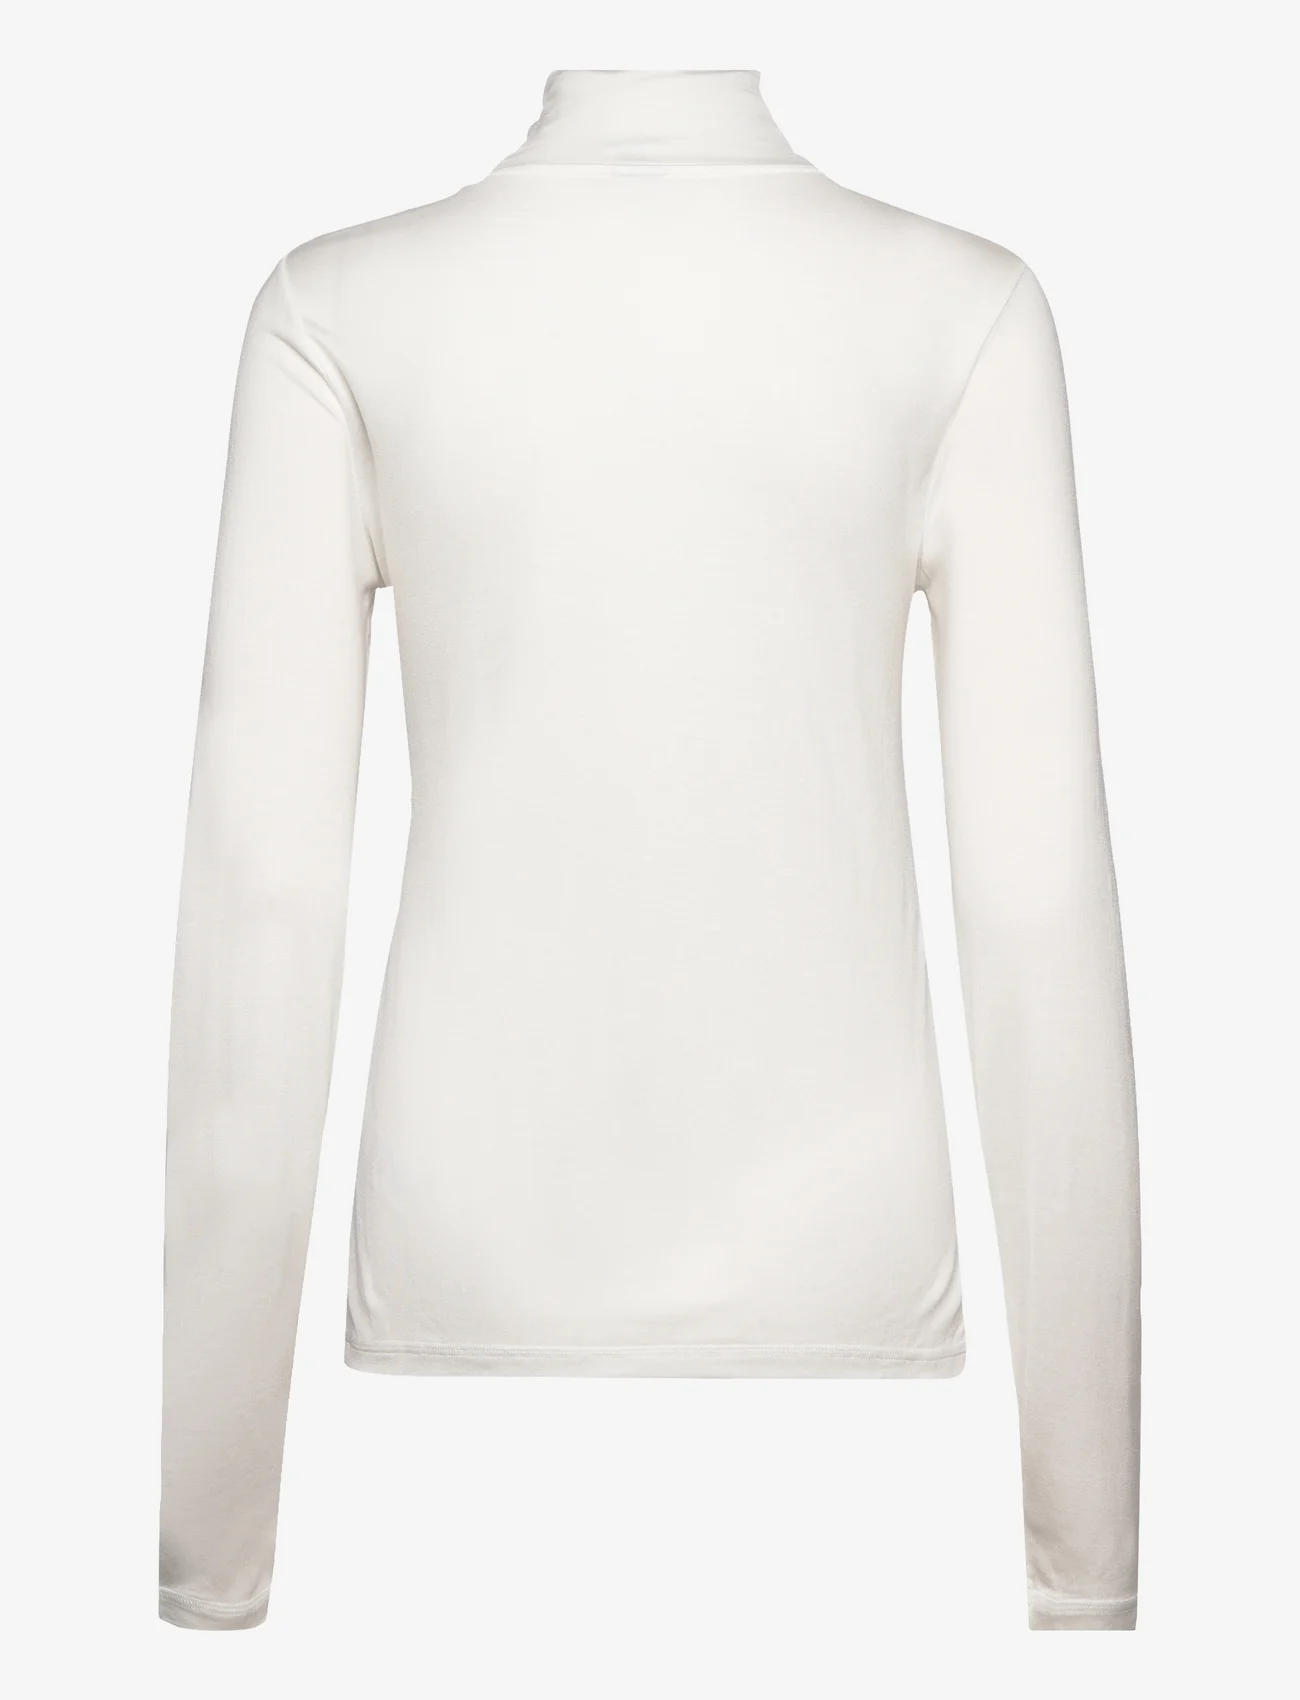 Twist & Tango - Ampezzo Ls Top - t-shirt & tops - off white - 1